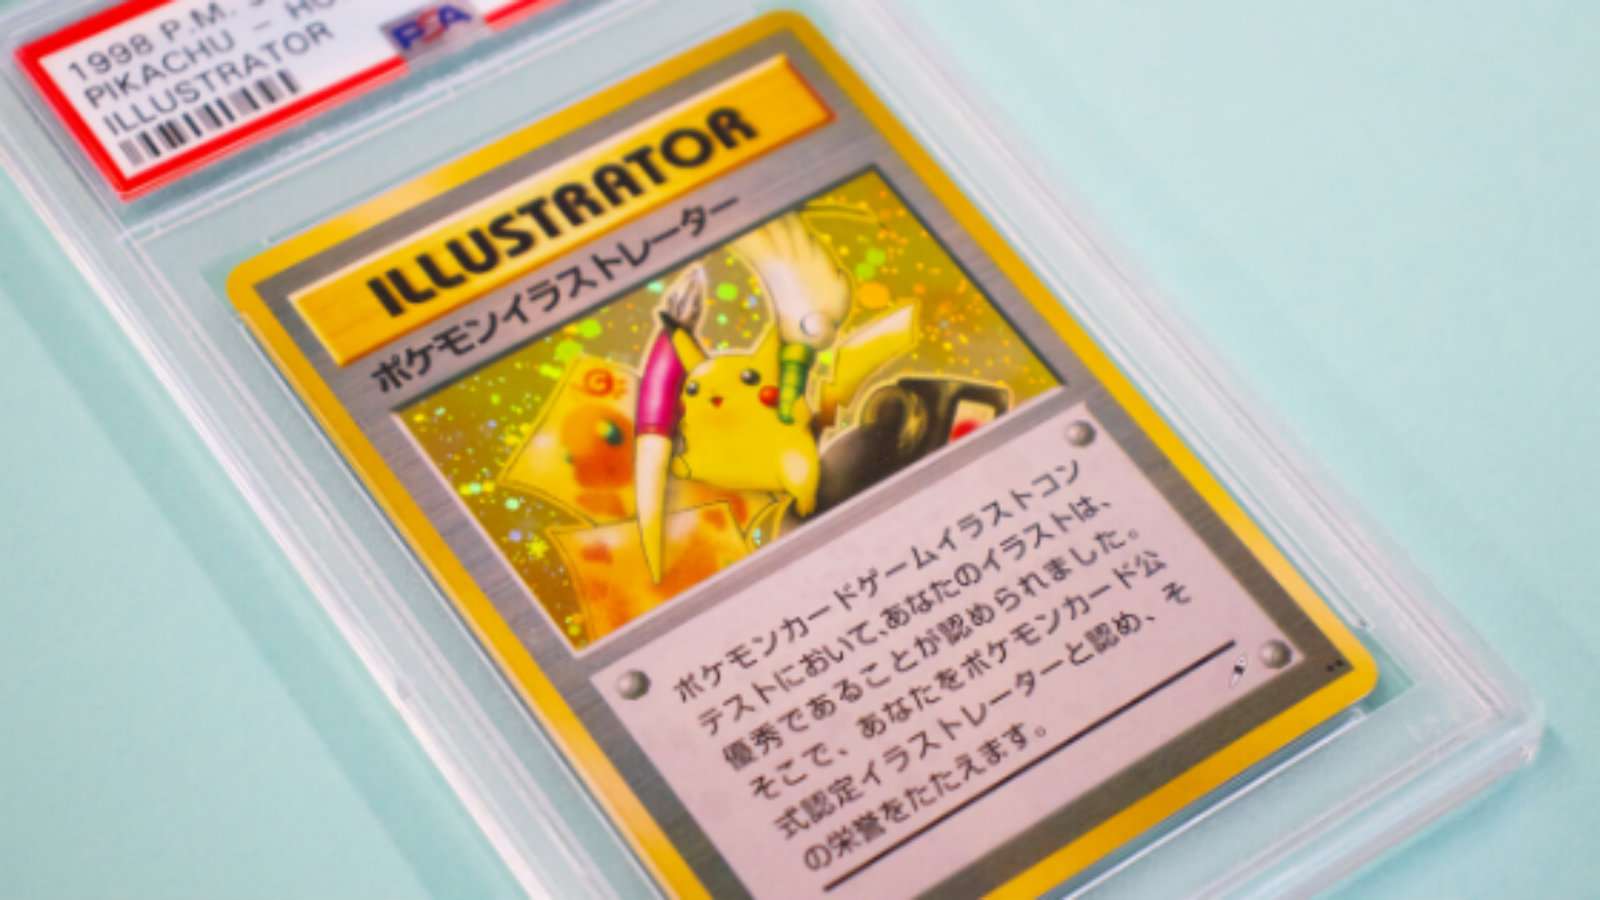 The rarest Pokemon card in existence: Illustrator